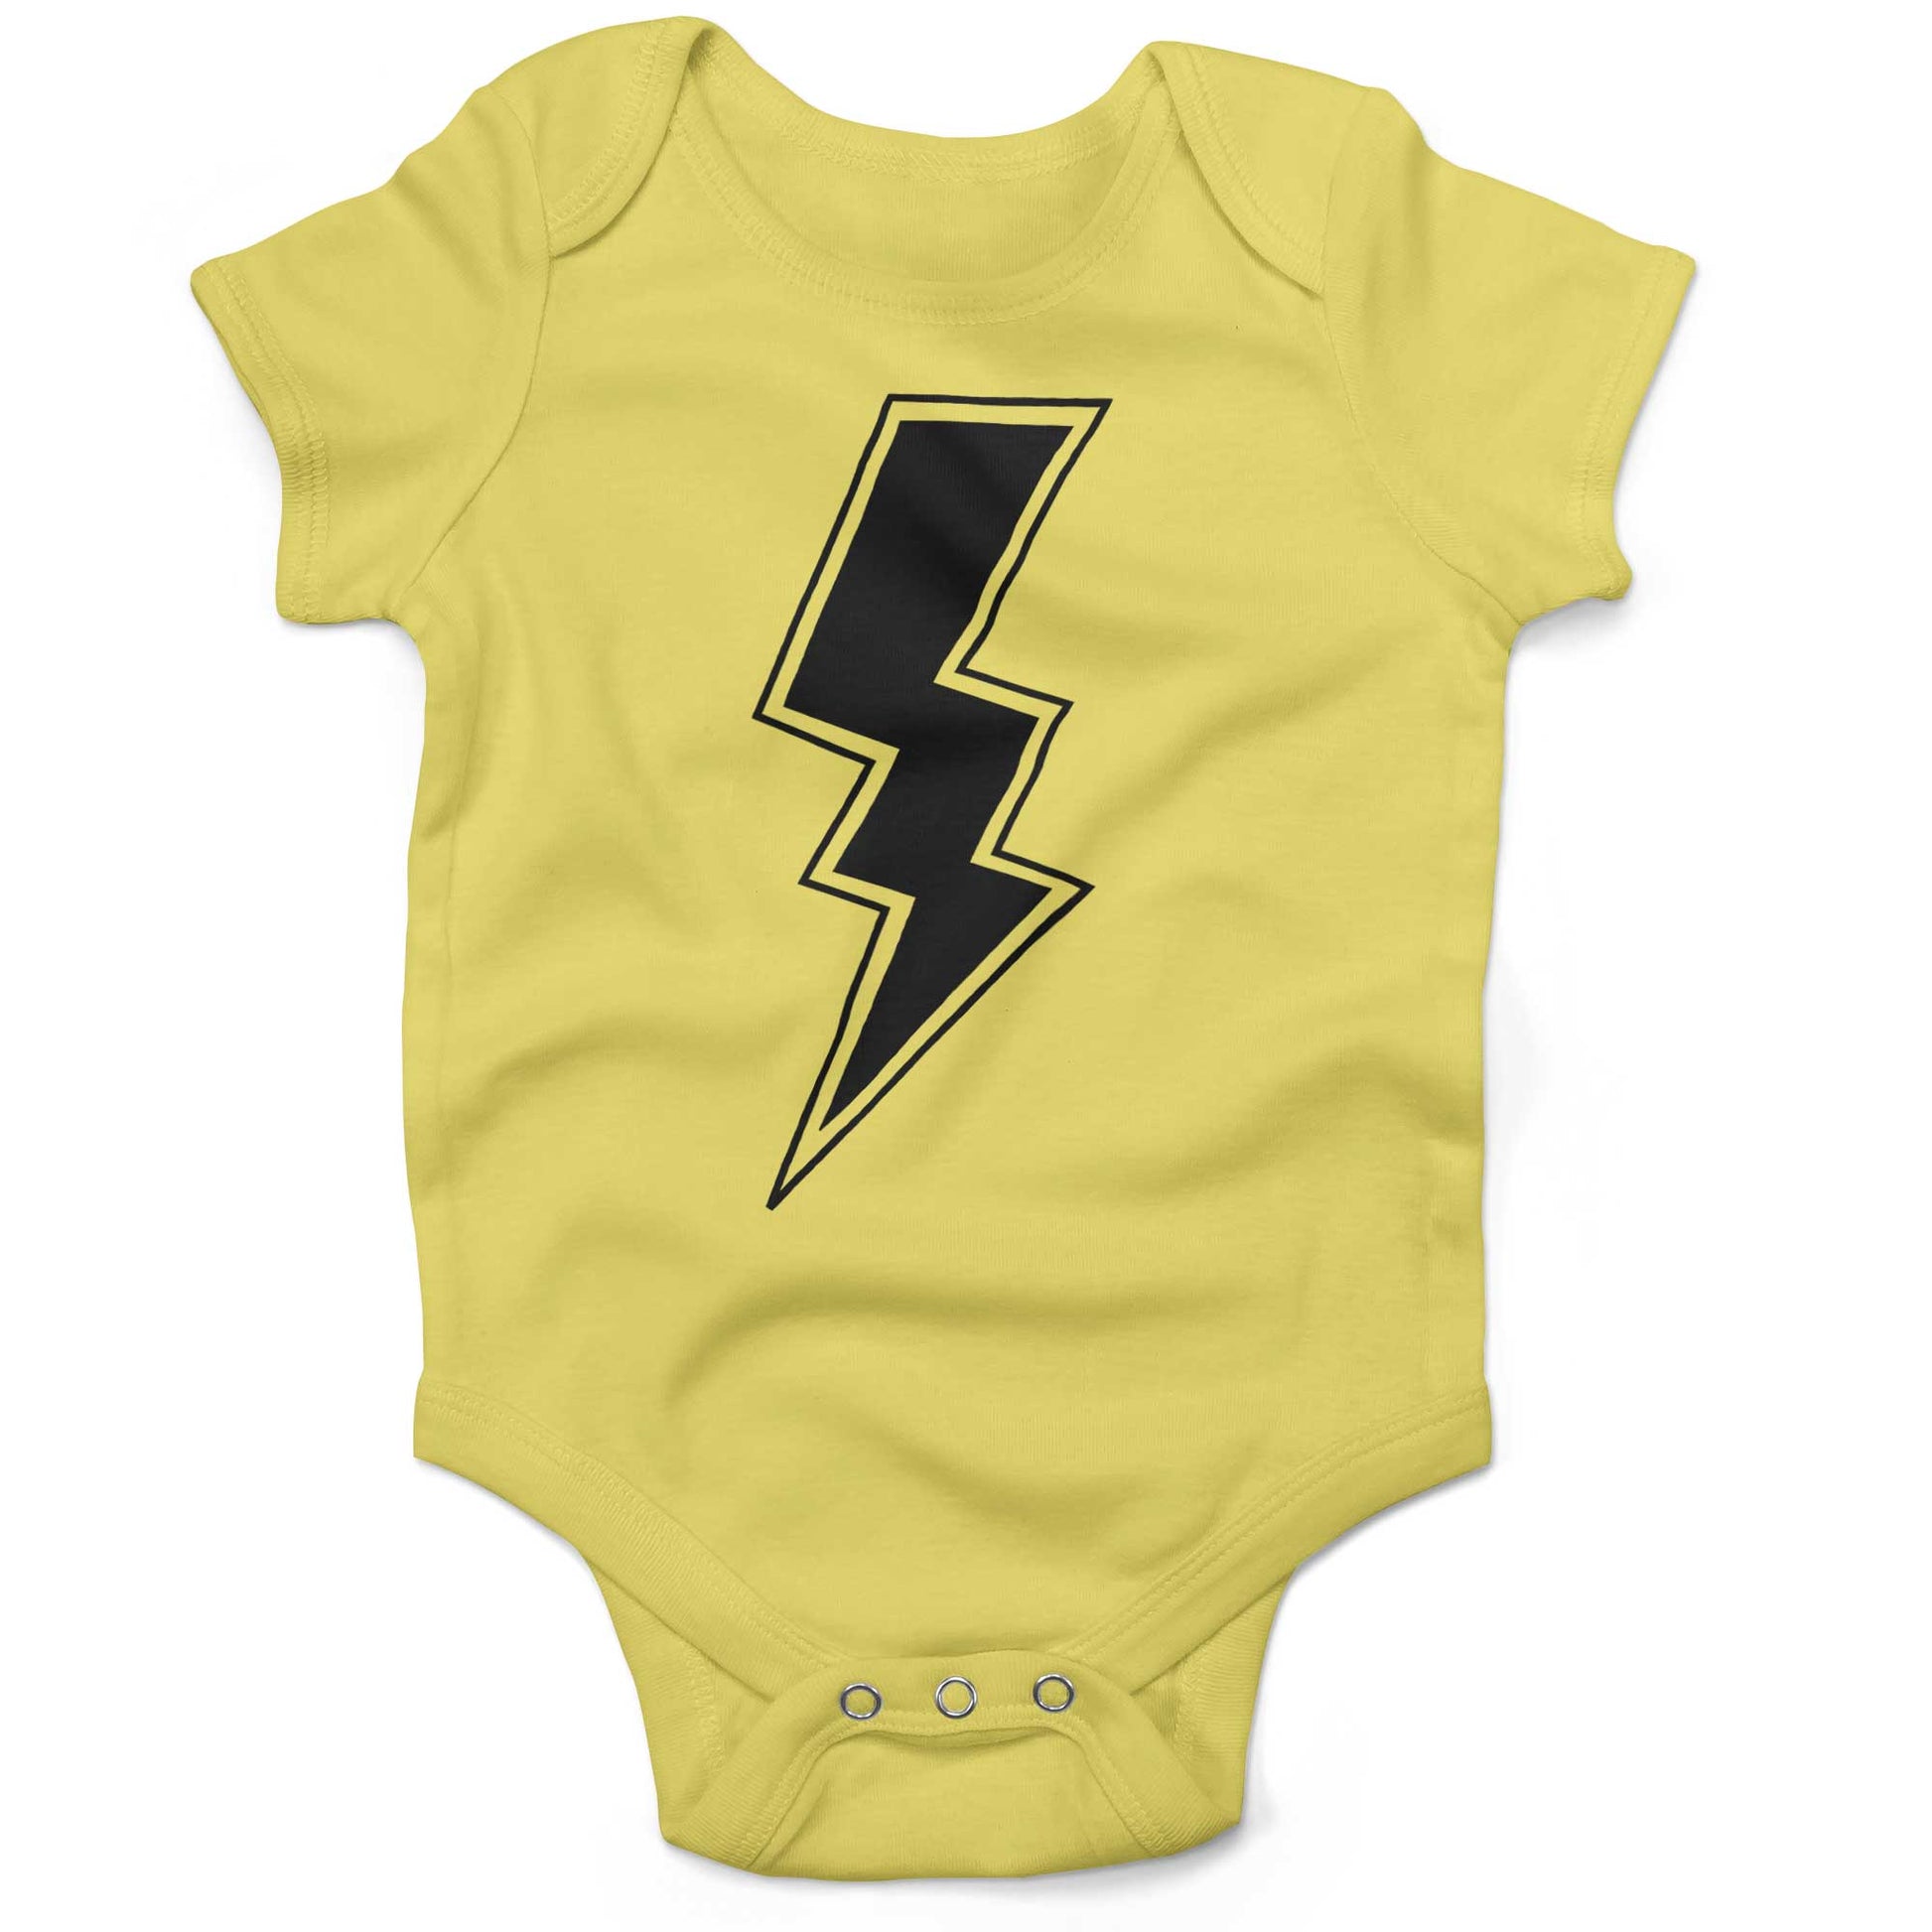 Giant Lightning Bolt Infant Bodysuit or Raglan Baby Tee-Yellow-3-6 months